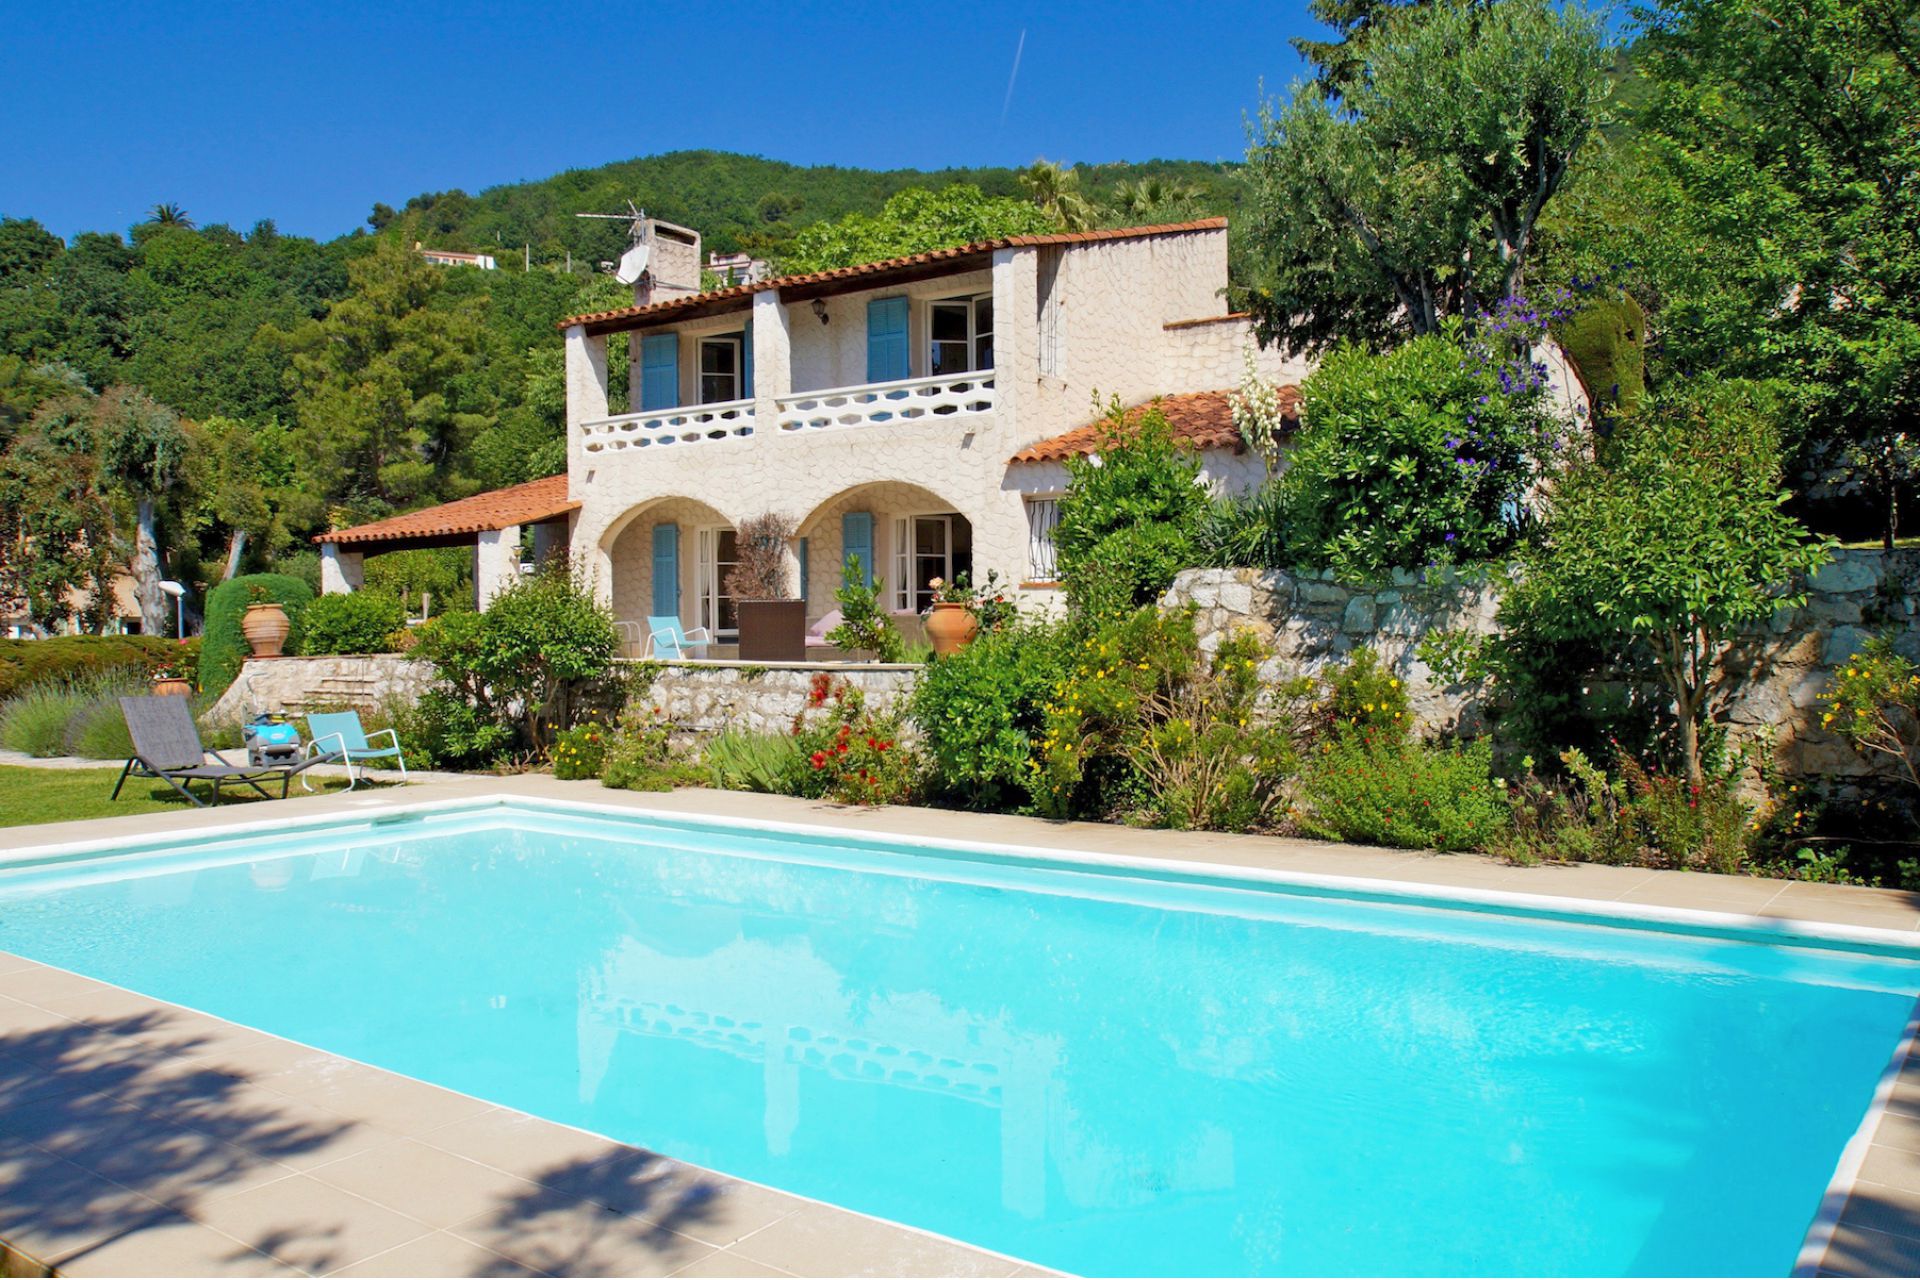 Méditerranée Location Villa with Private pool in Vence, Côte d'Azur